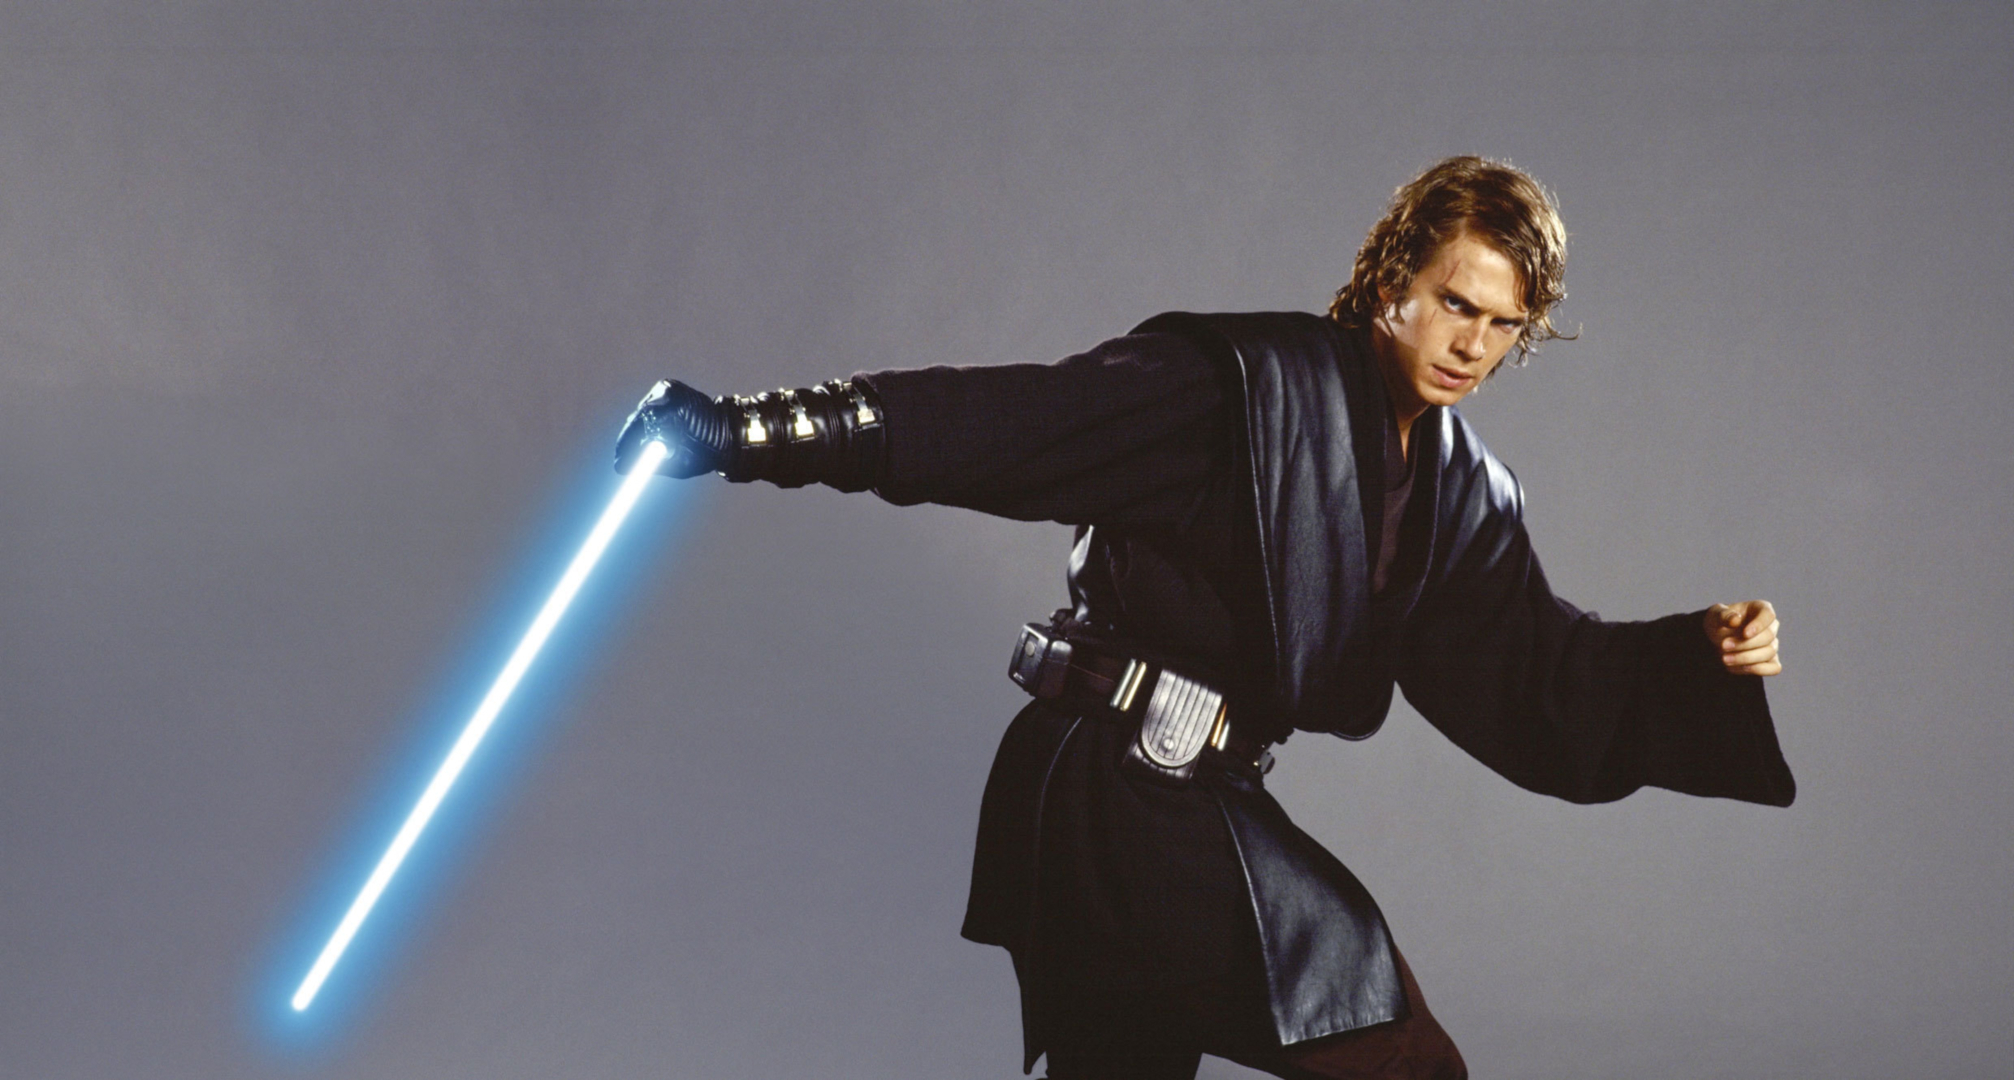 2014x1080 Star Wars Episode III: Revenge of the Sith Anakin Skywalker